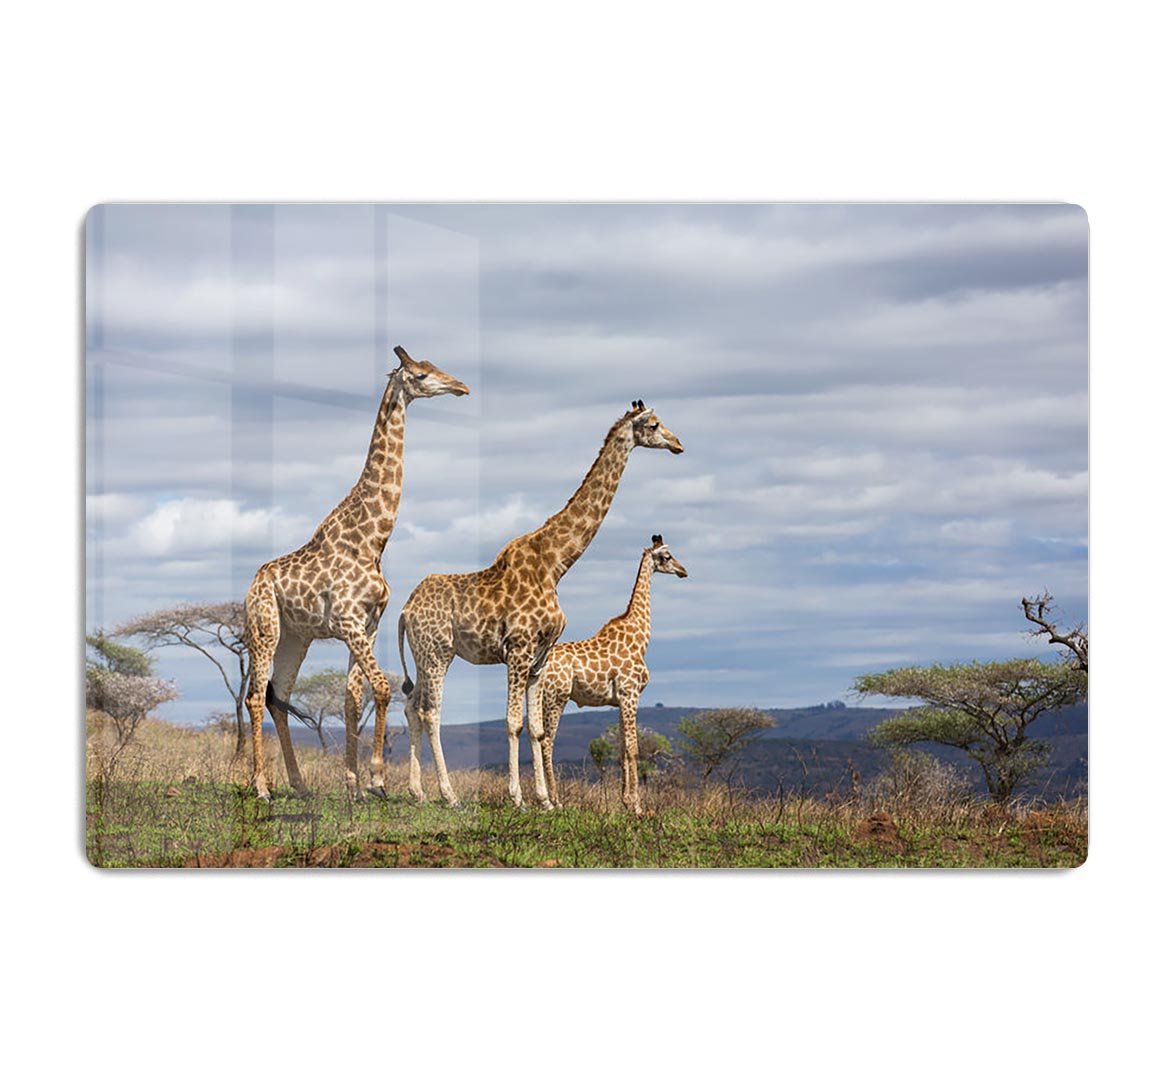 Giraffes in south africa game reserve HD Metal Print - Canvas Art Rocks - 1